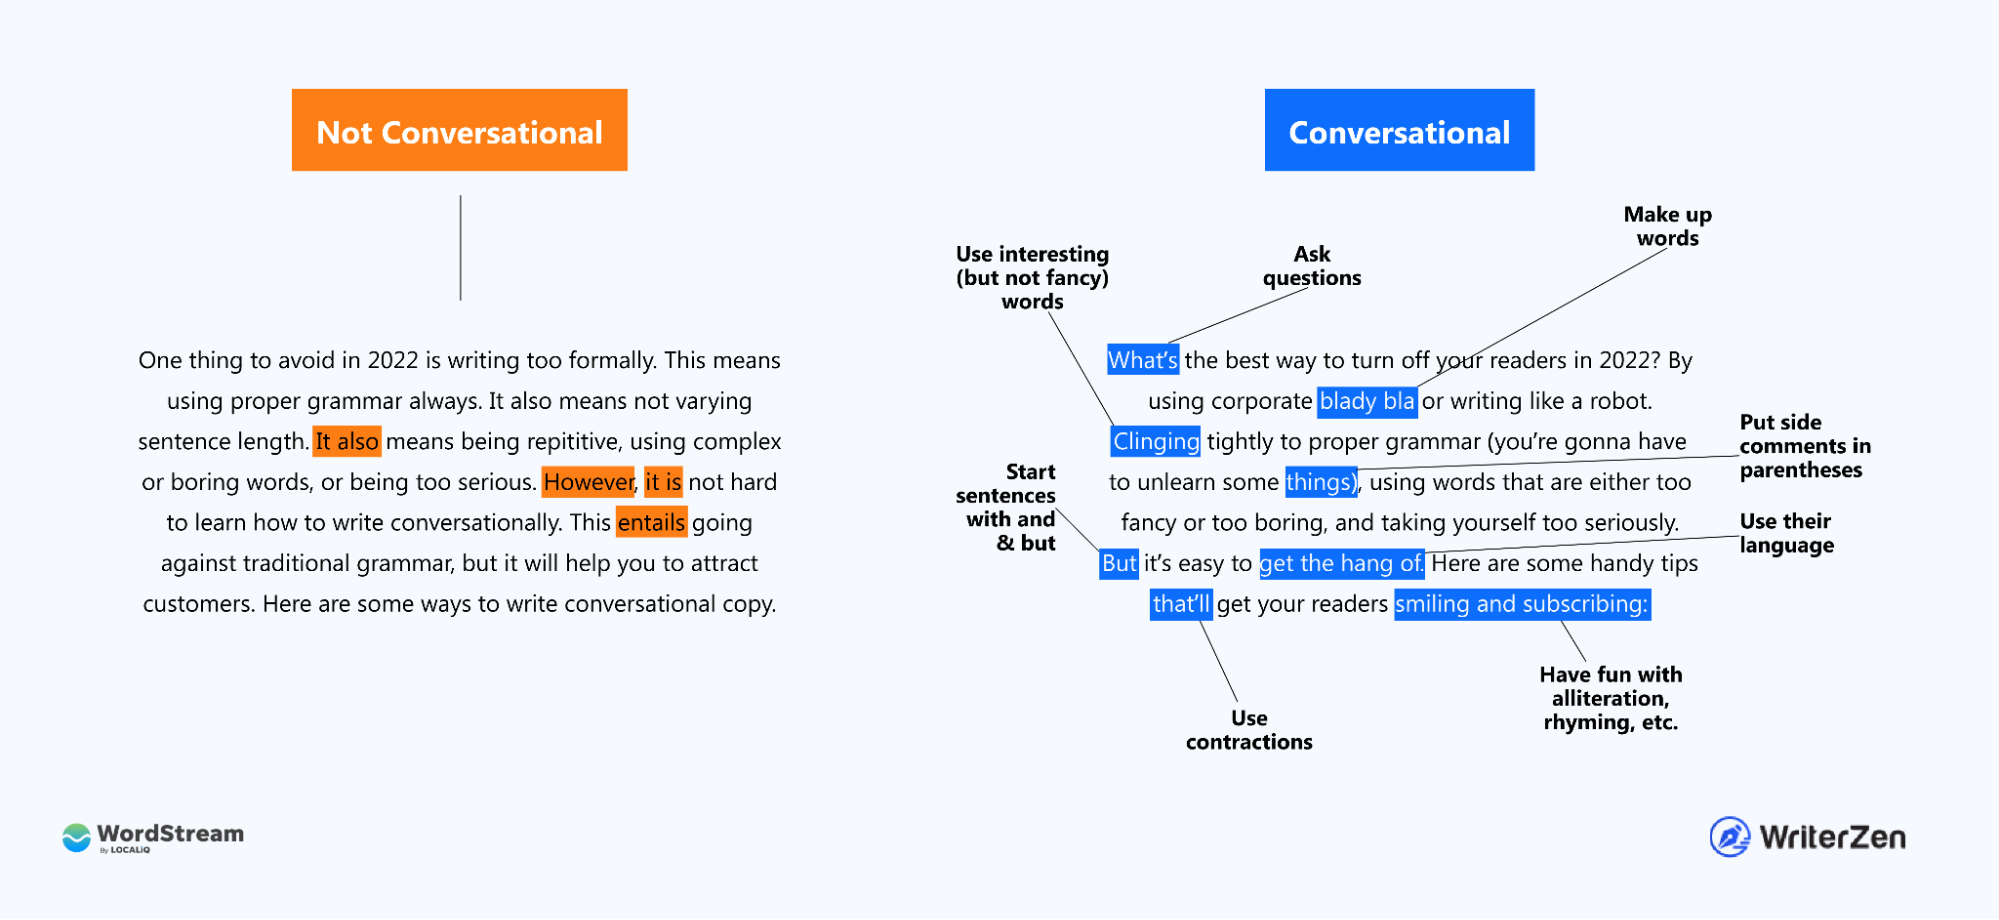 Conversational vs Not Conversational Text